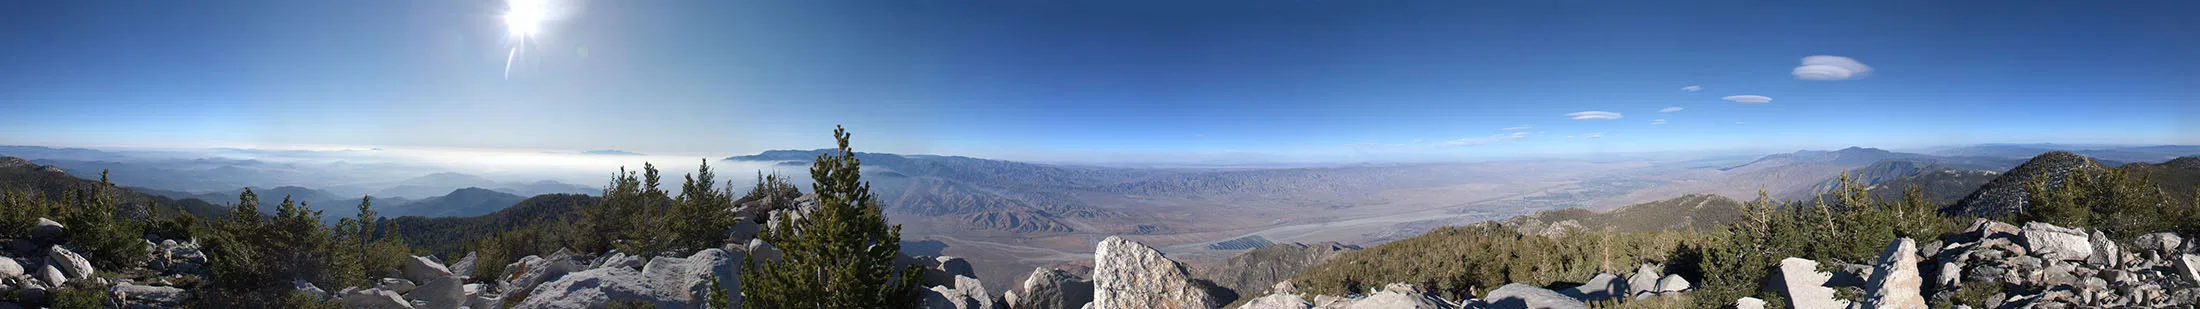 Panorama from San Jacinto Peak